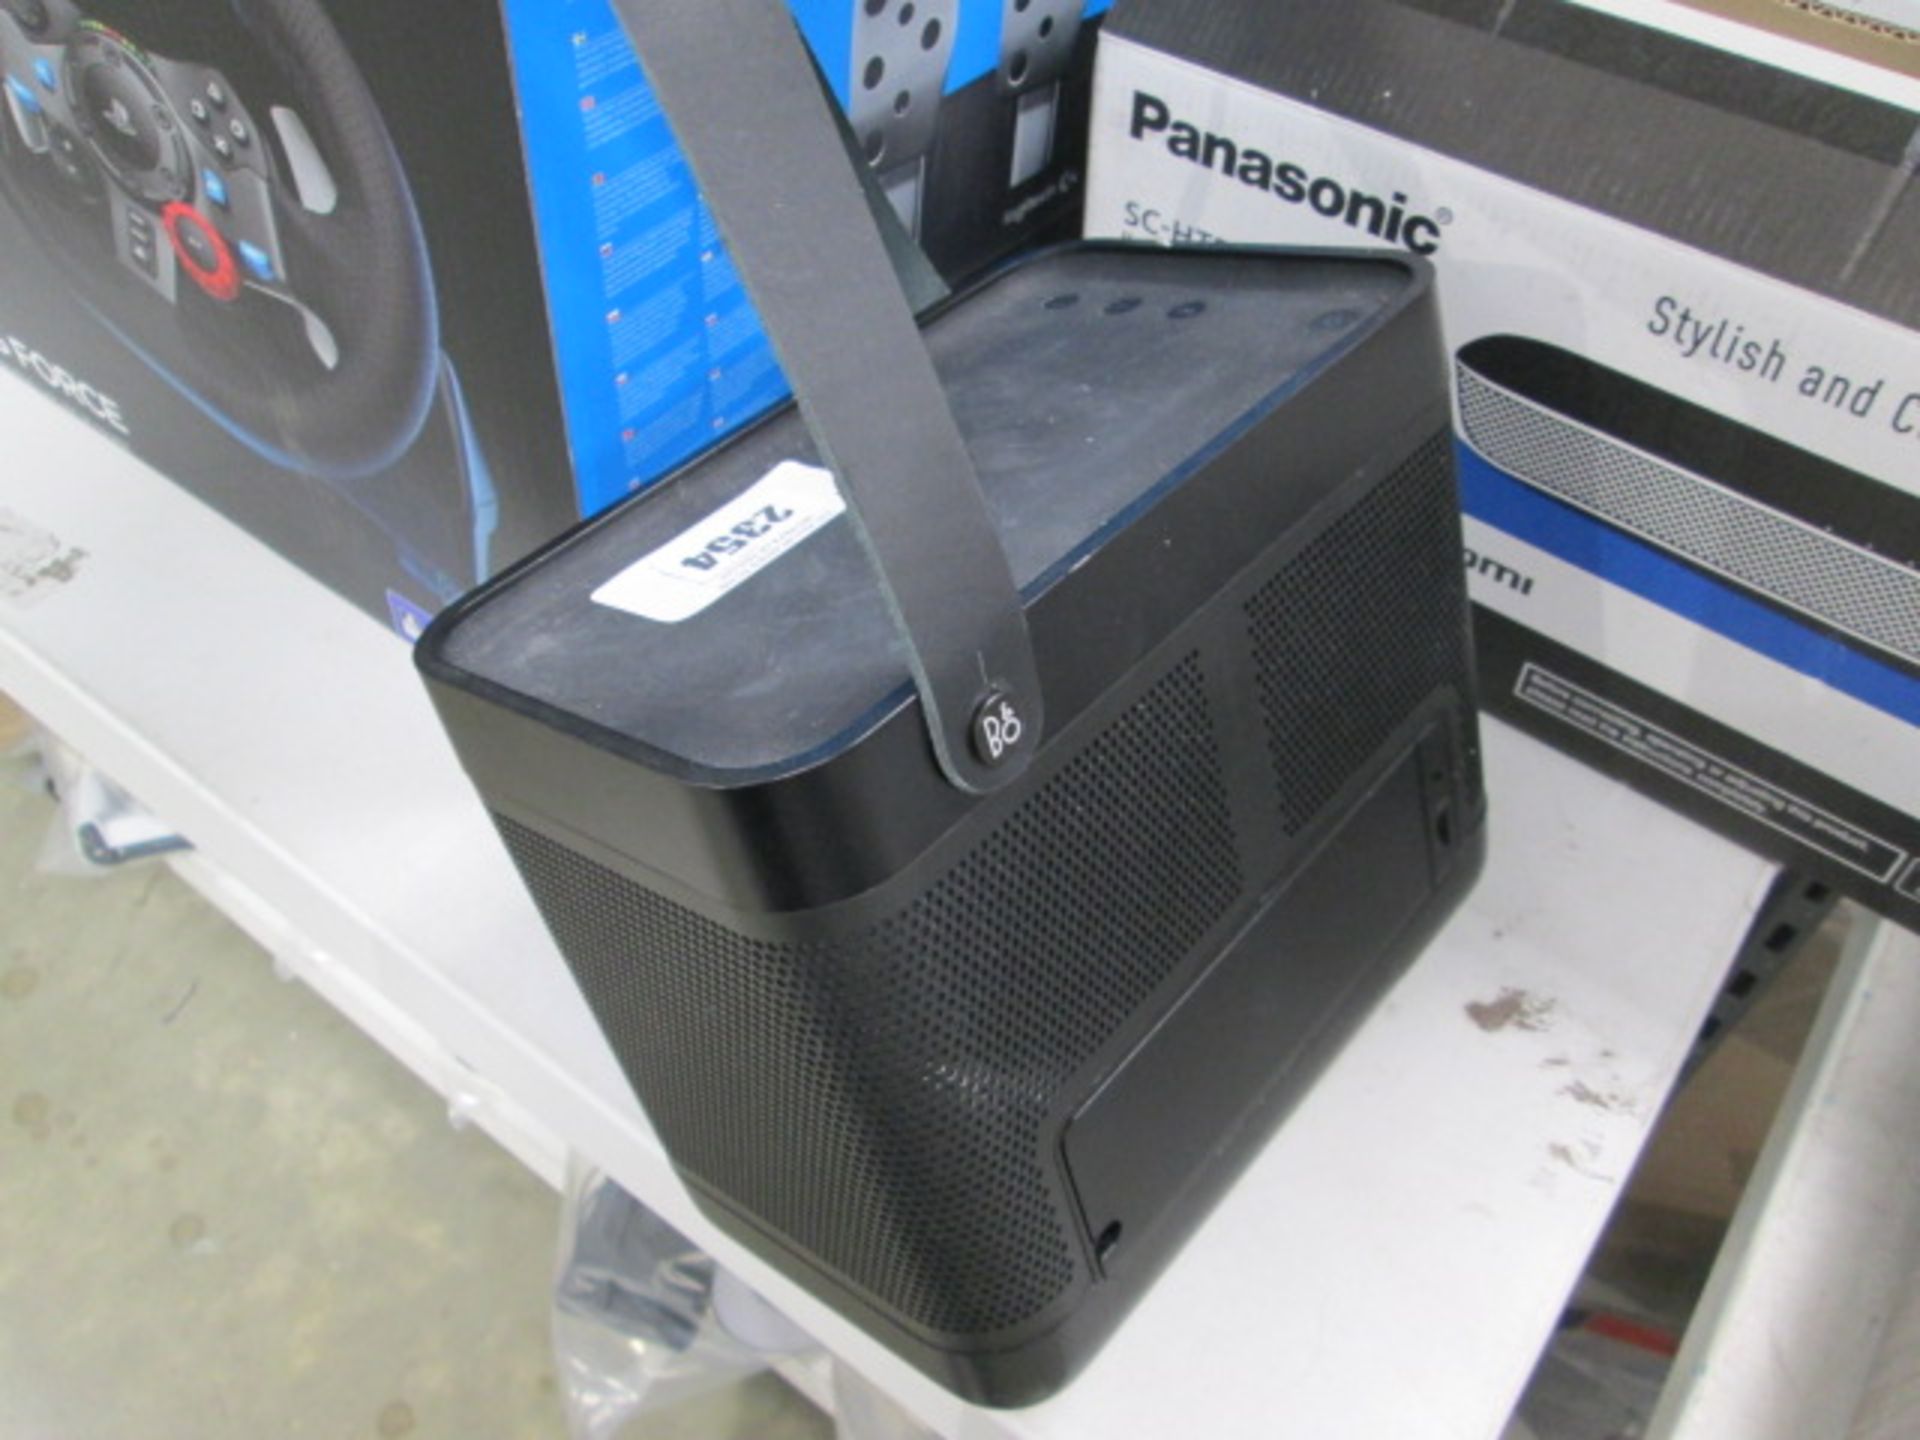 Bang & Olufsen Beolit 15 portable bluetooth speaker (no box) - Image 2 of 2